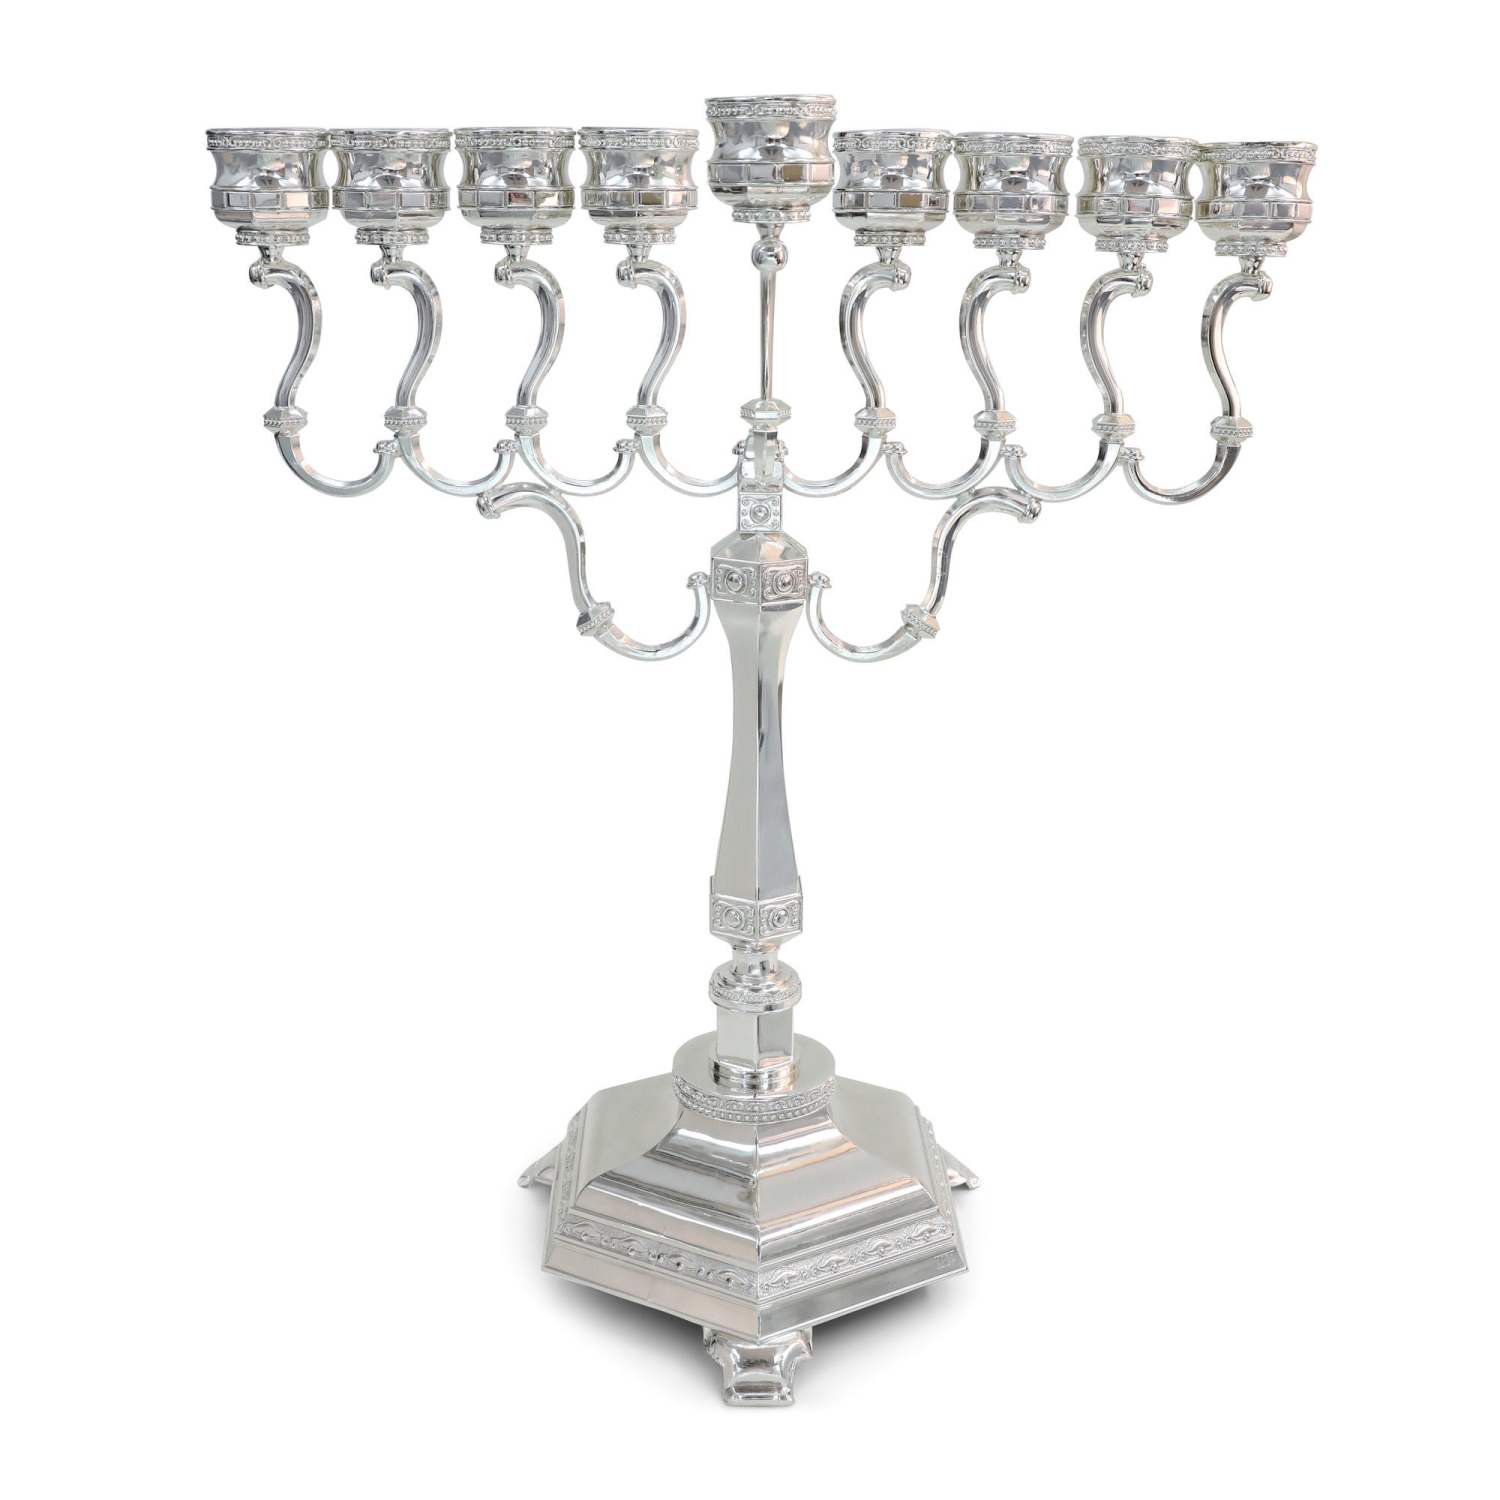 Giant Silver Plated Hanukkah Menorah - 1